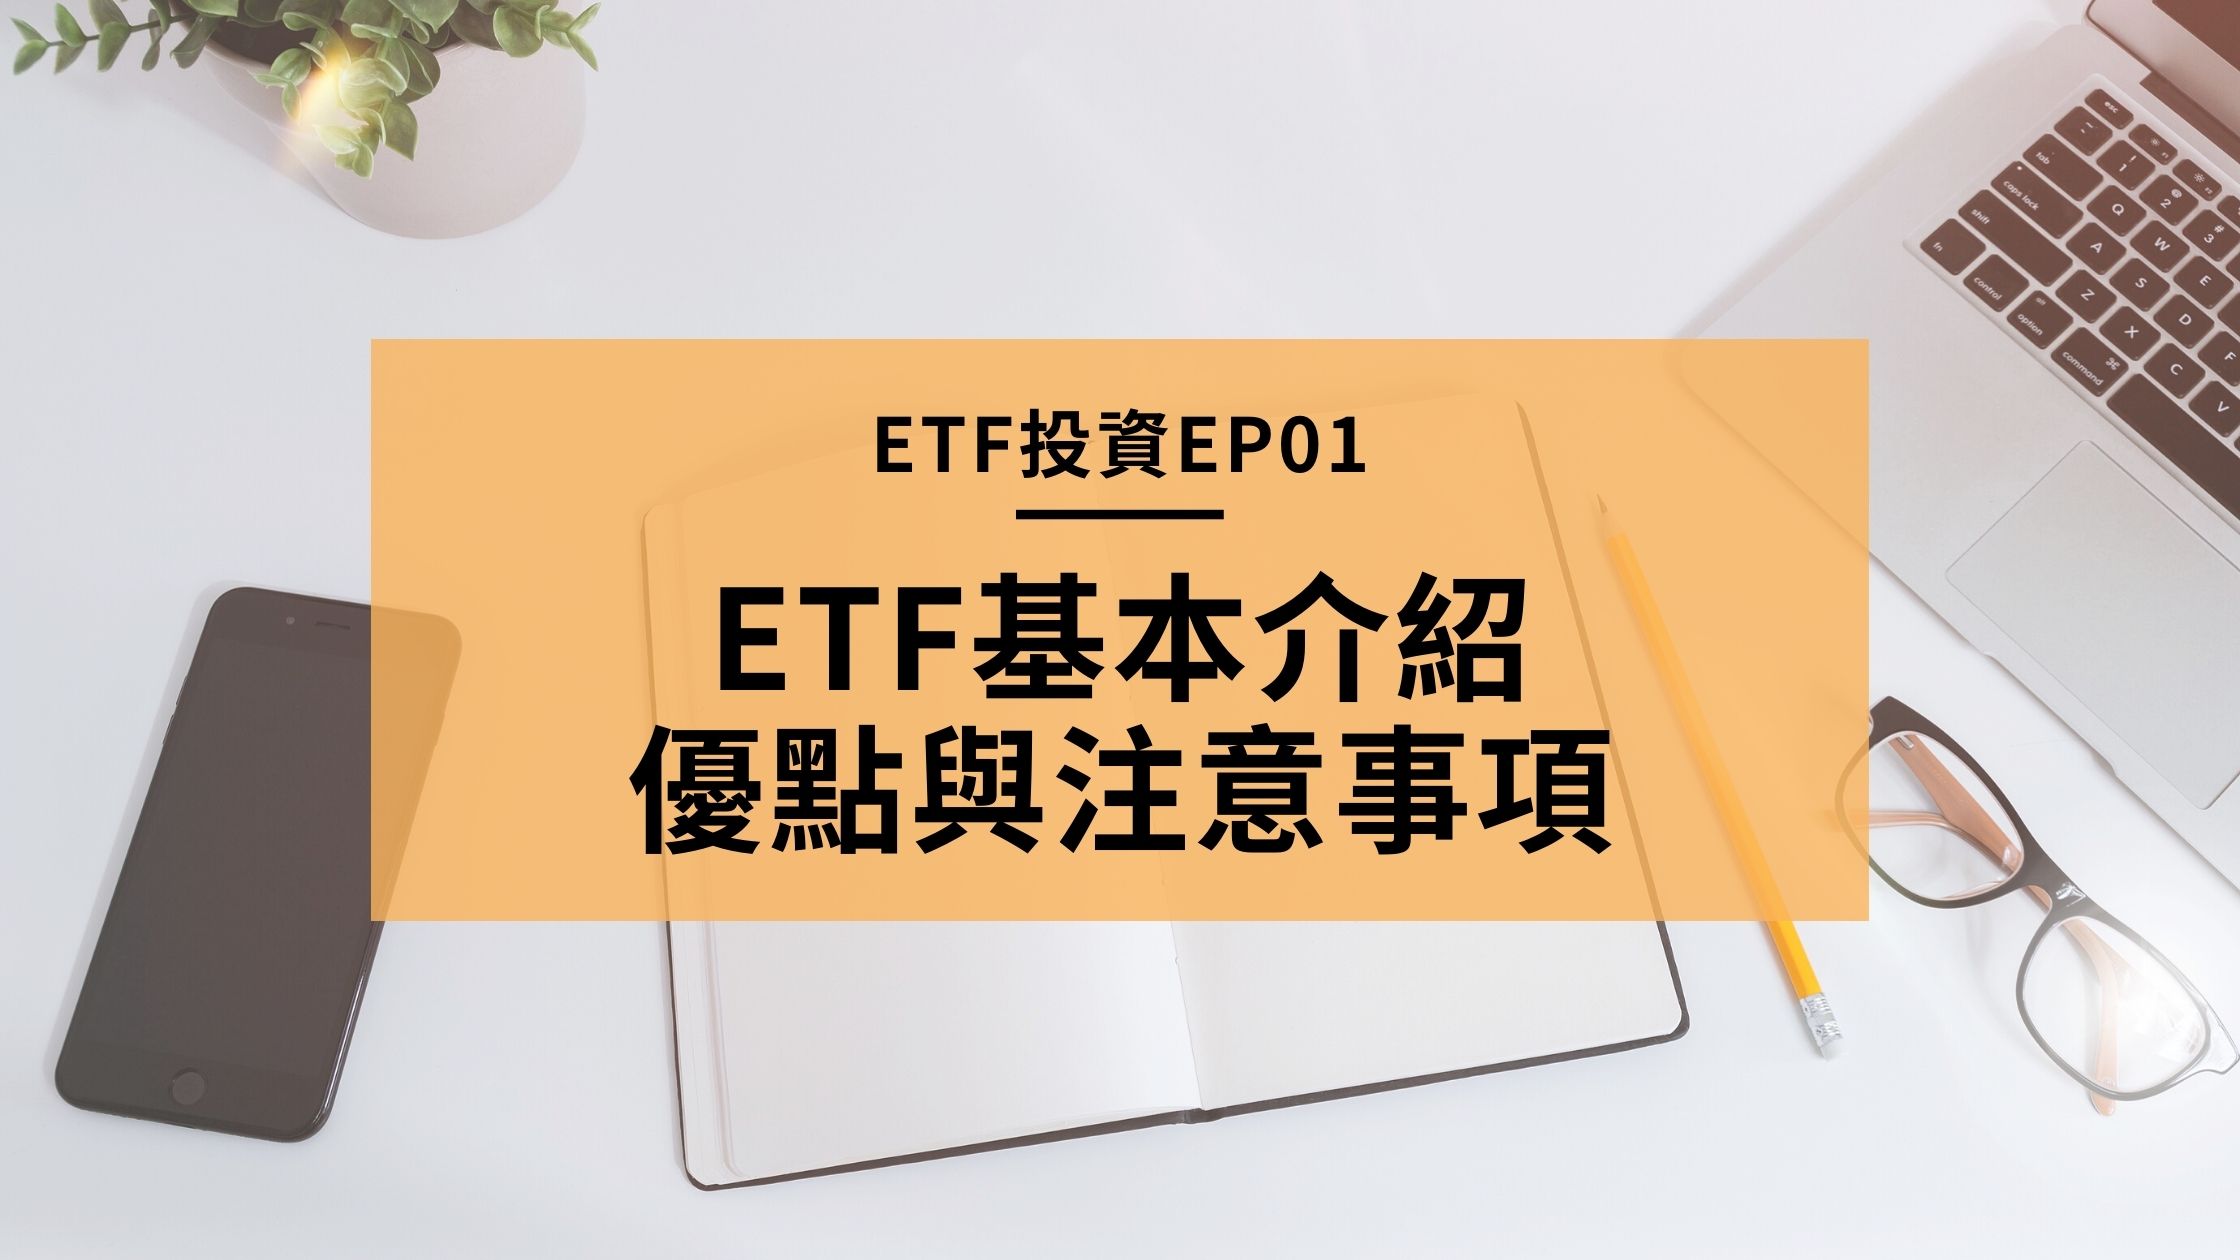 Etf是什麼 基本介紹 優點與注意事項 Etf投資ep01 Irene S 學旅筆記